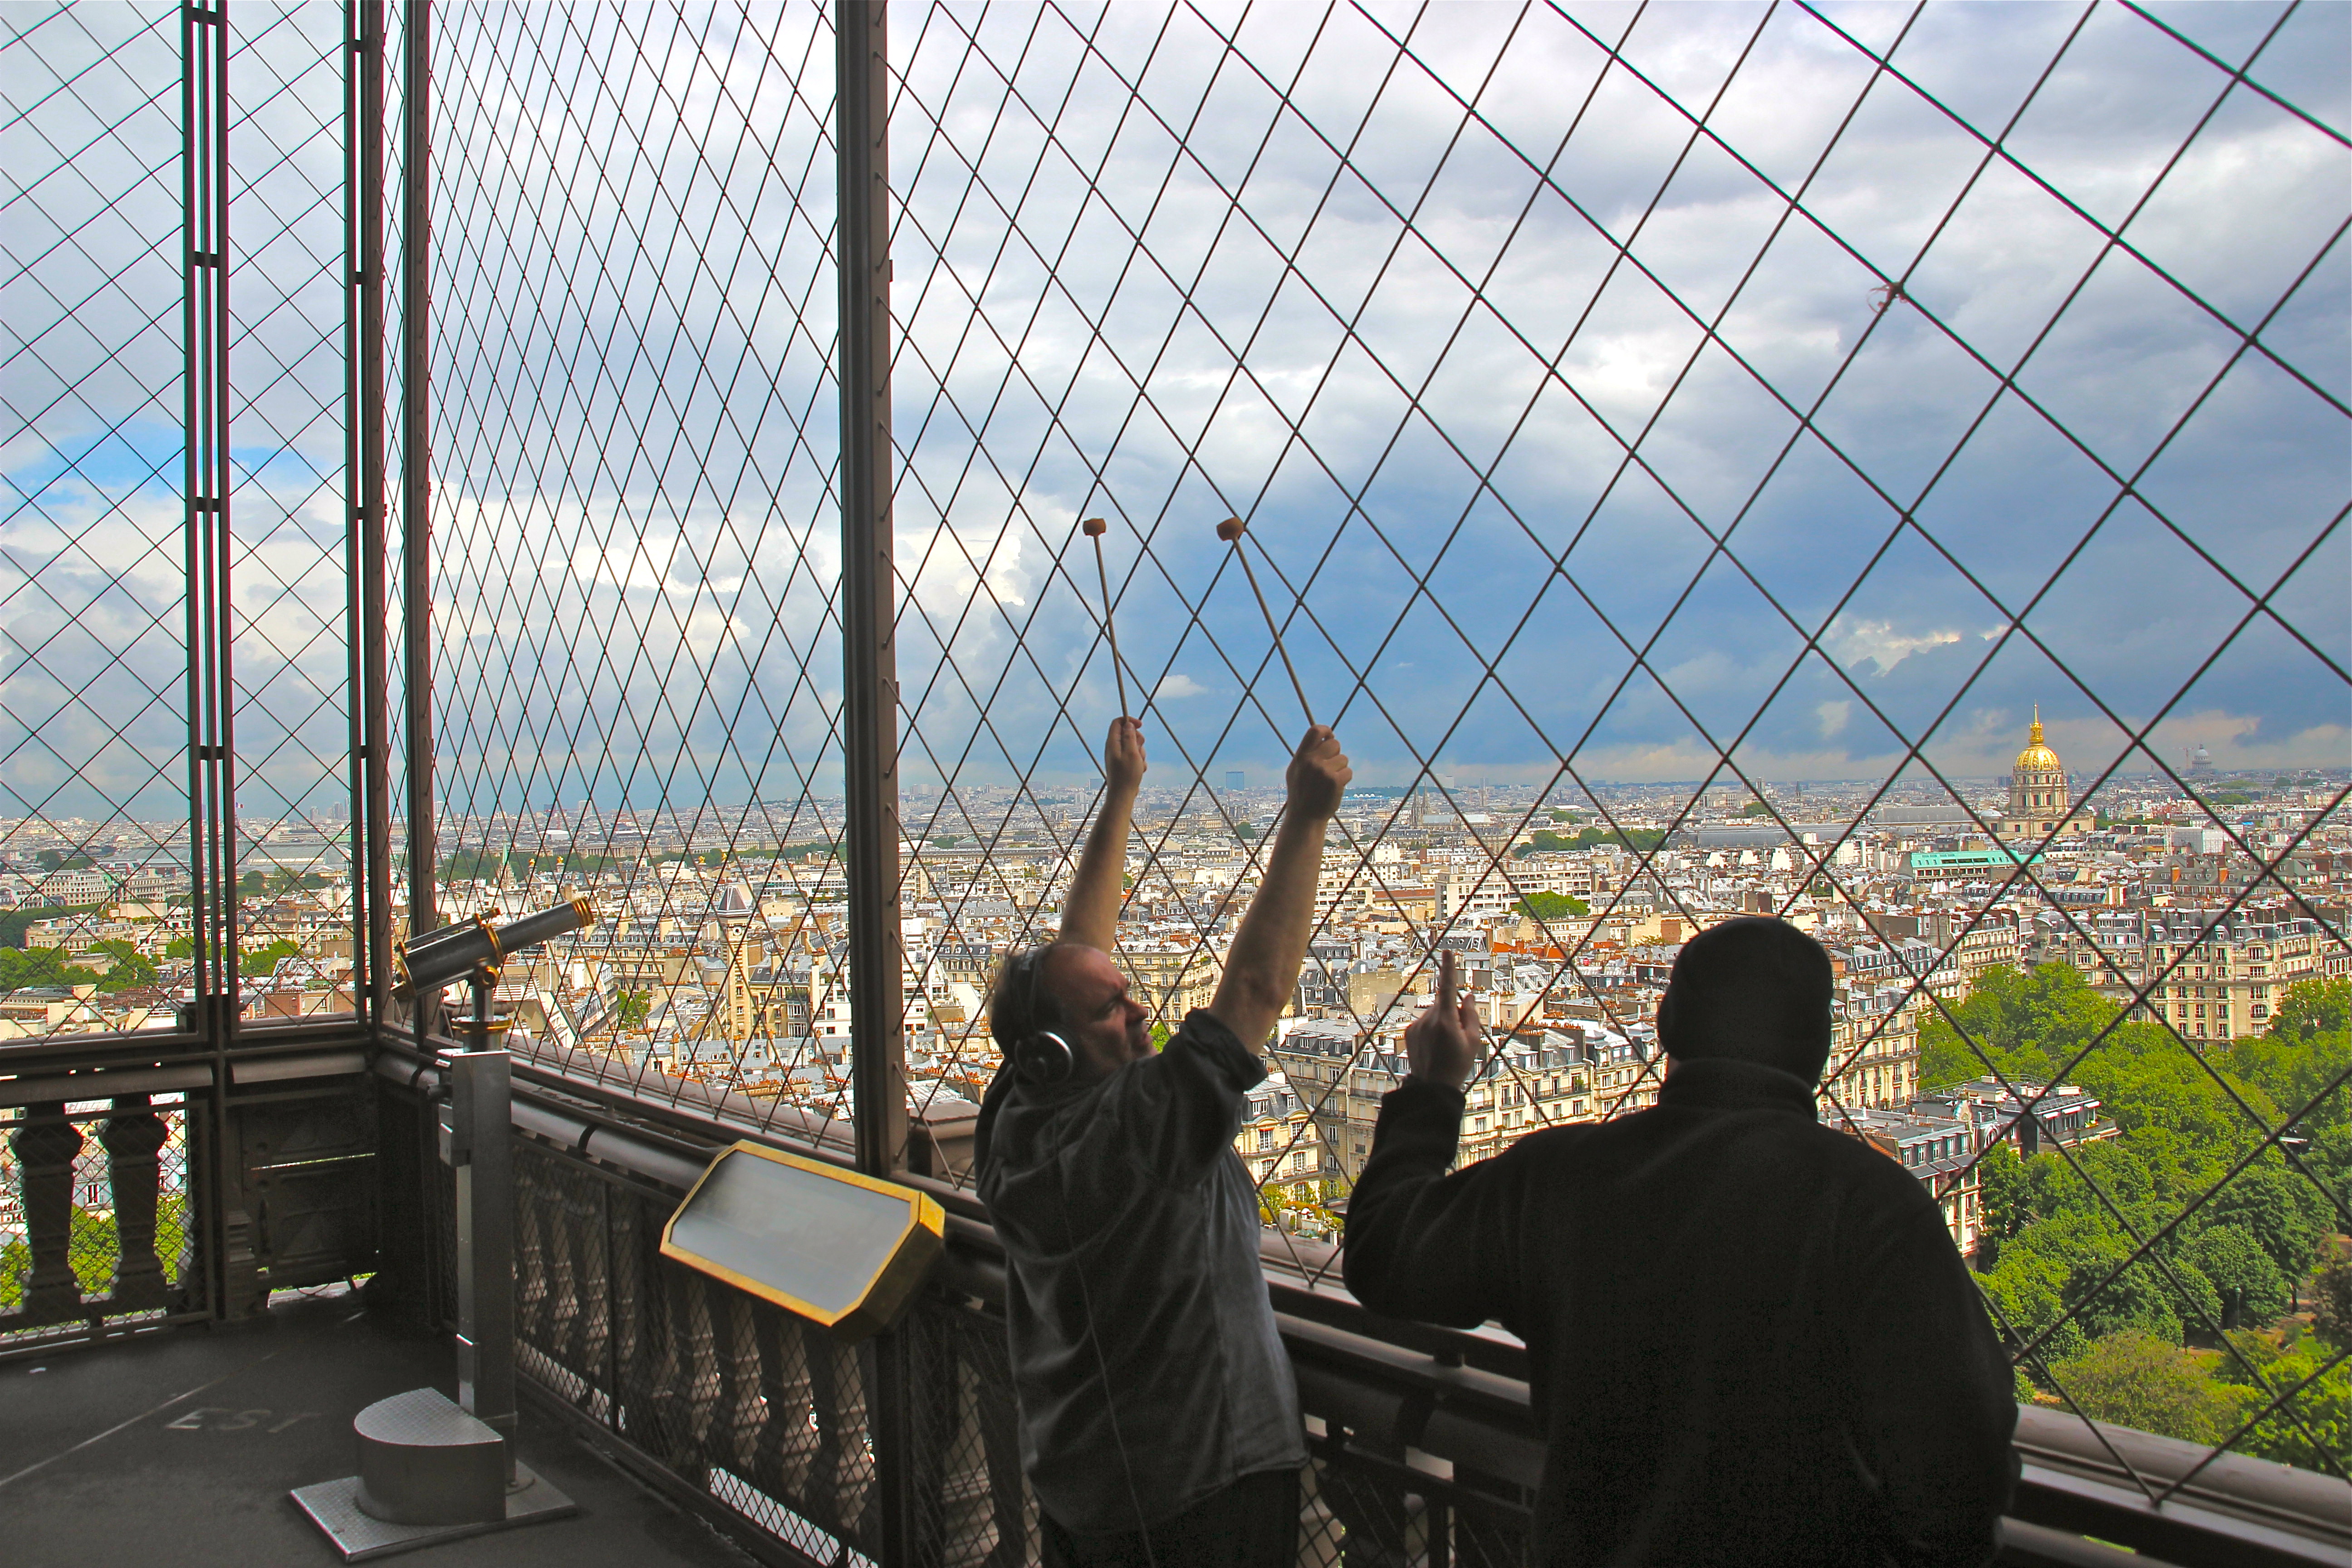 Joseph Bertolozzi and Joe Popp recording the Eiffel Tower. Image (c) 2013, by Franc Palaia